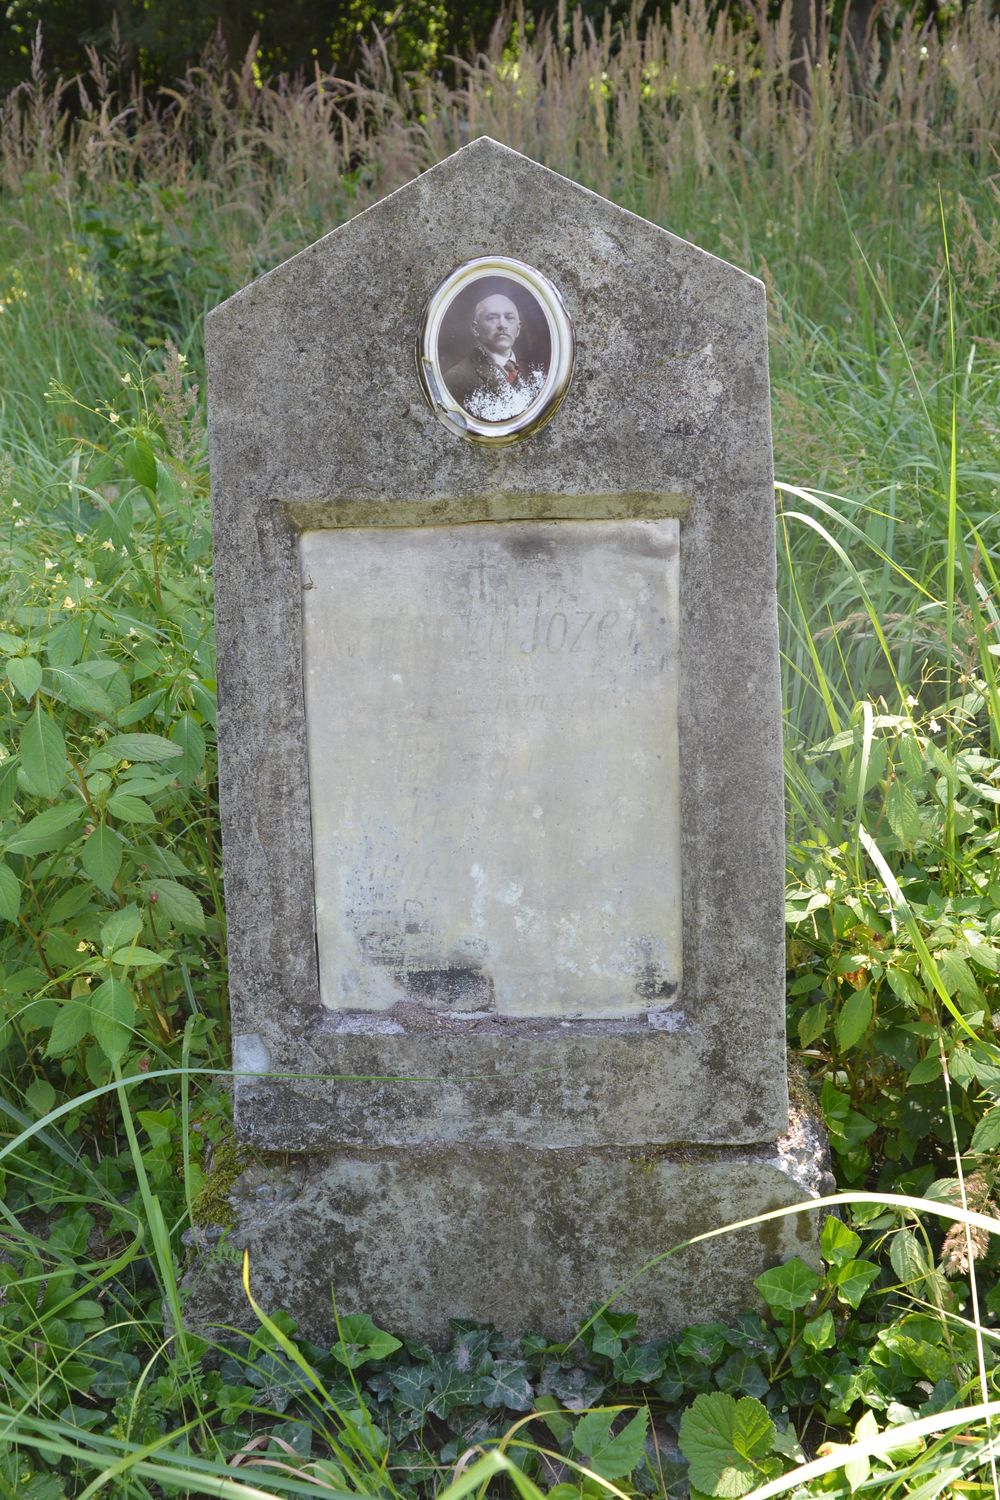 Tombstone of Jozef Konopka, cemetery in Karviná Mexico, Czech Republic, as of 2022